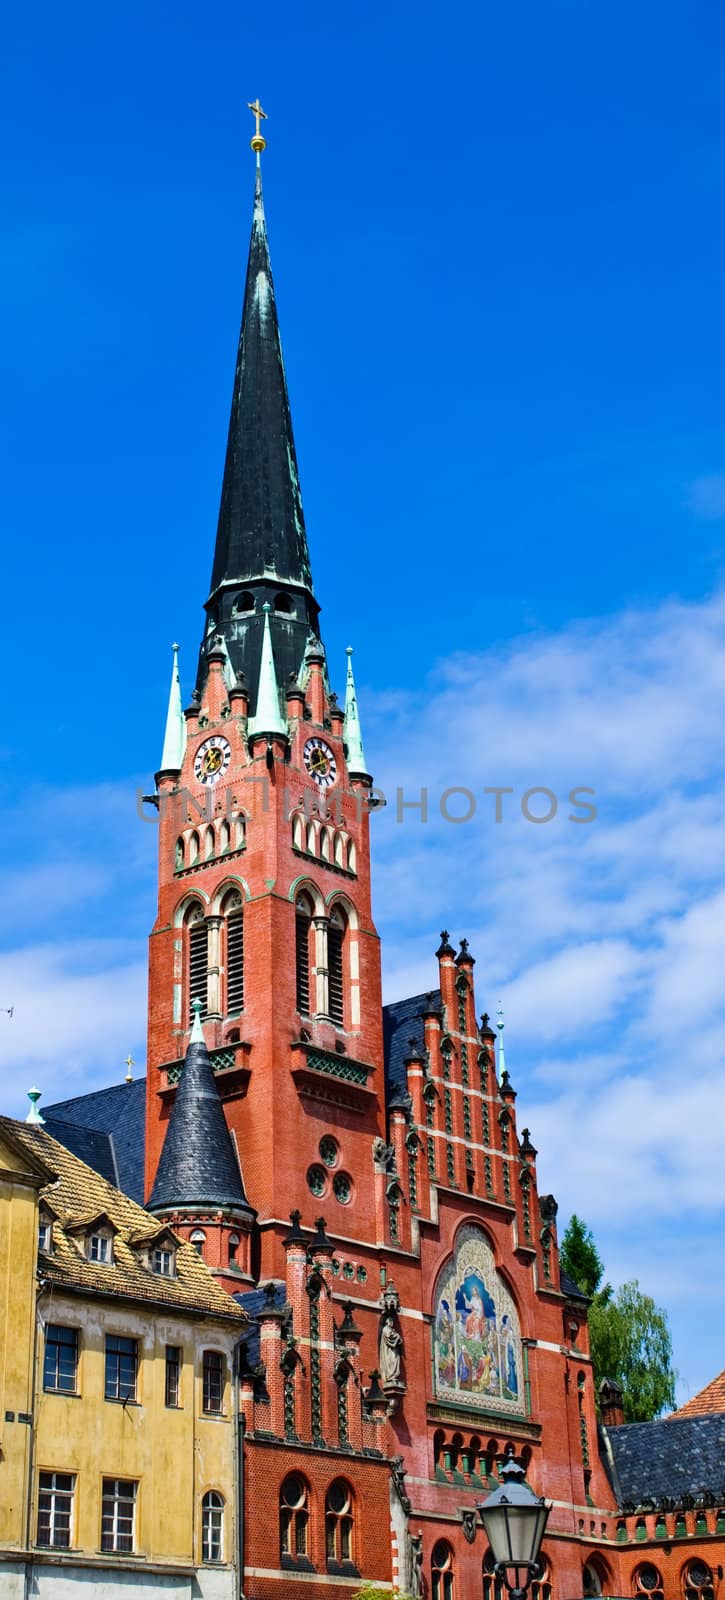 Church in city centre by leonom